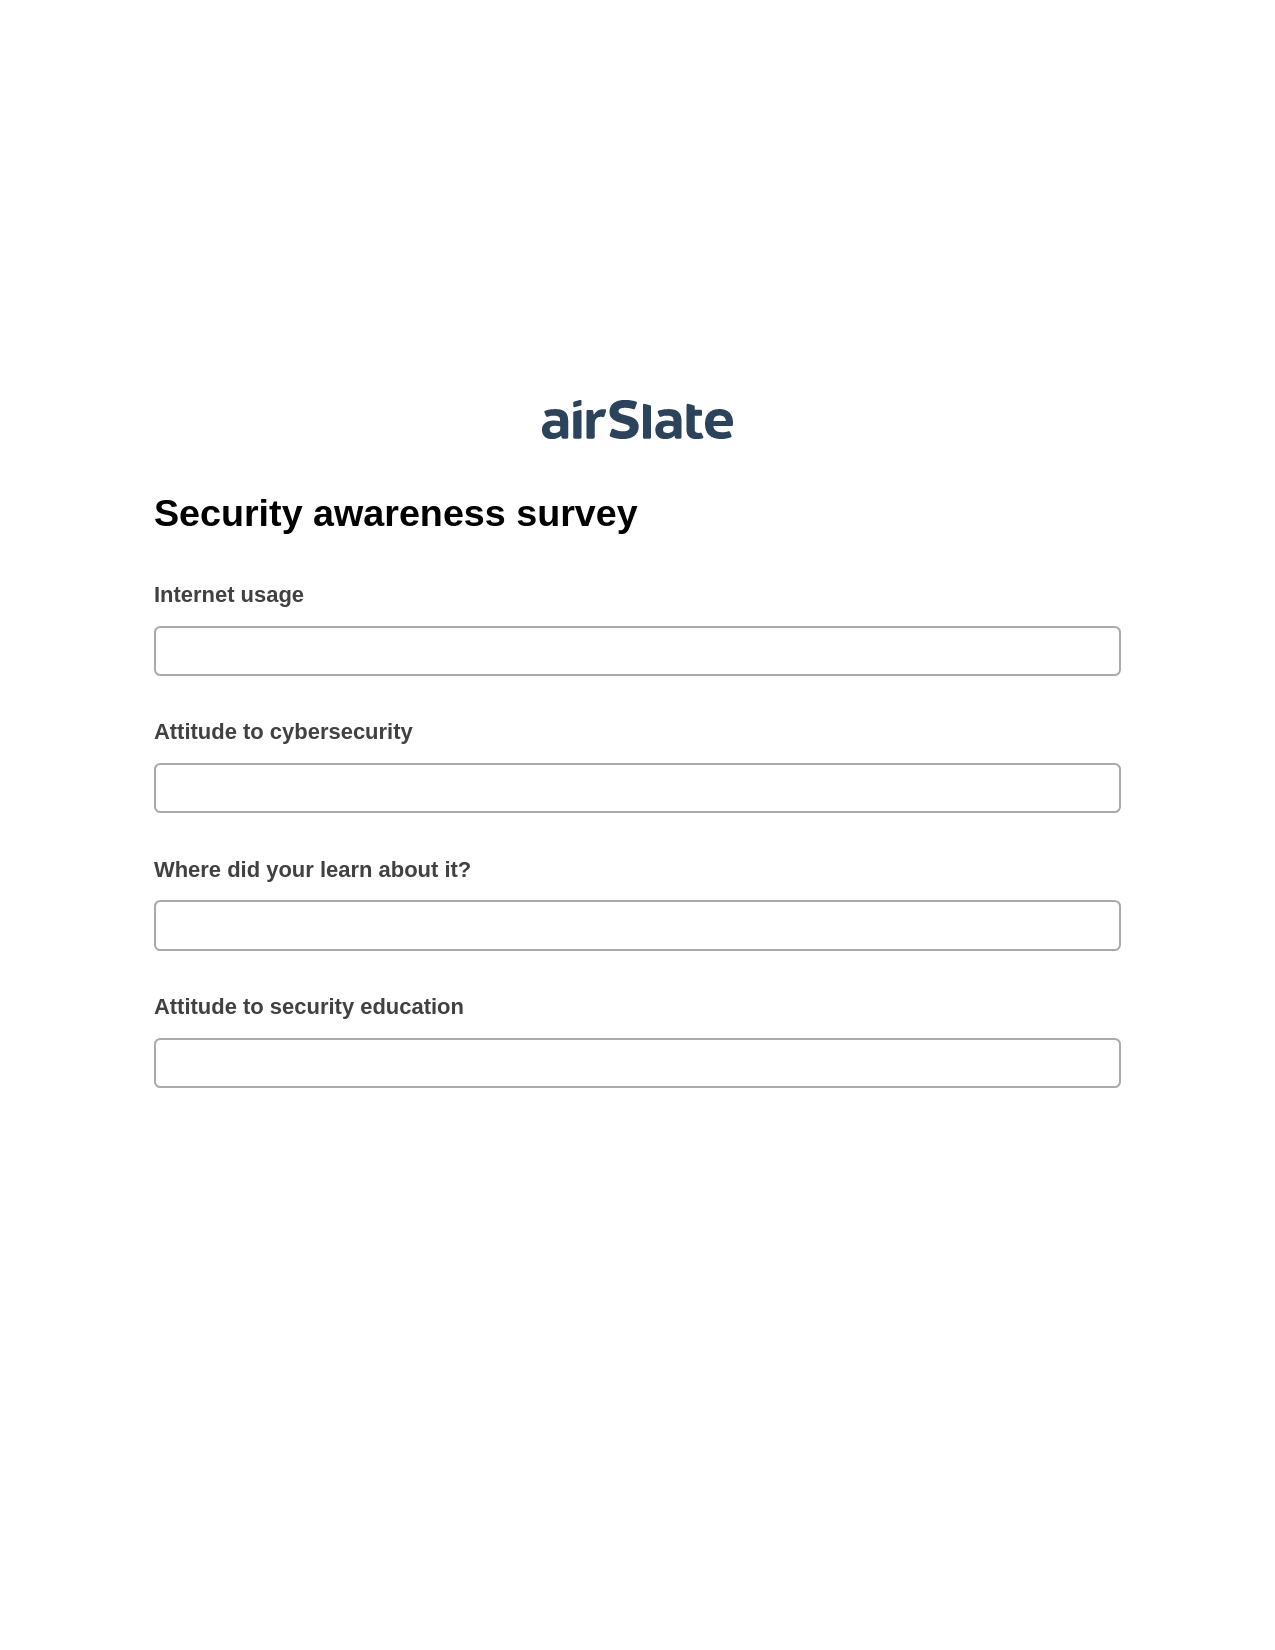 Security awareness survey Pre-fill from MySQL Dropdown Options Bot, SendGrid send Campaign bot, Slack Two-Way Binding Bot